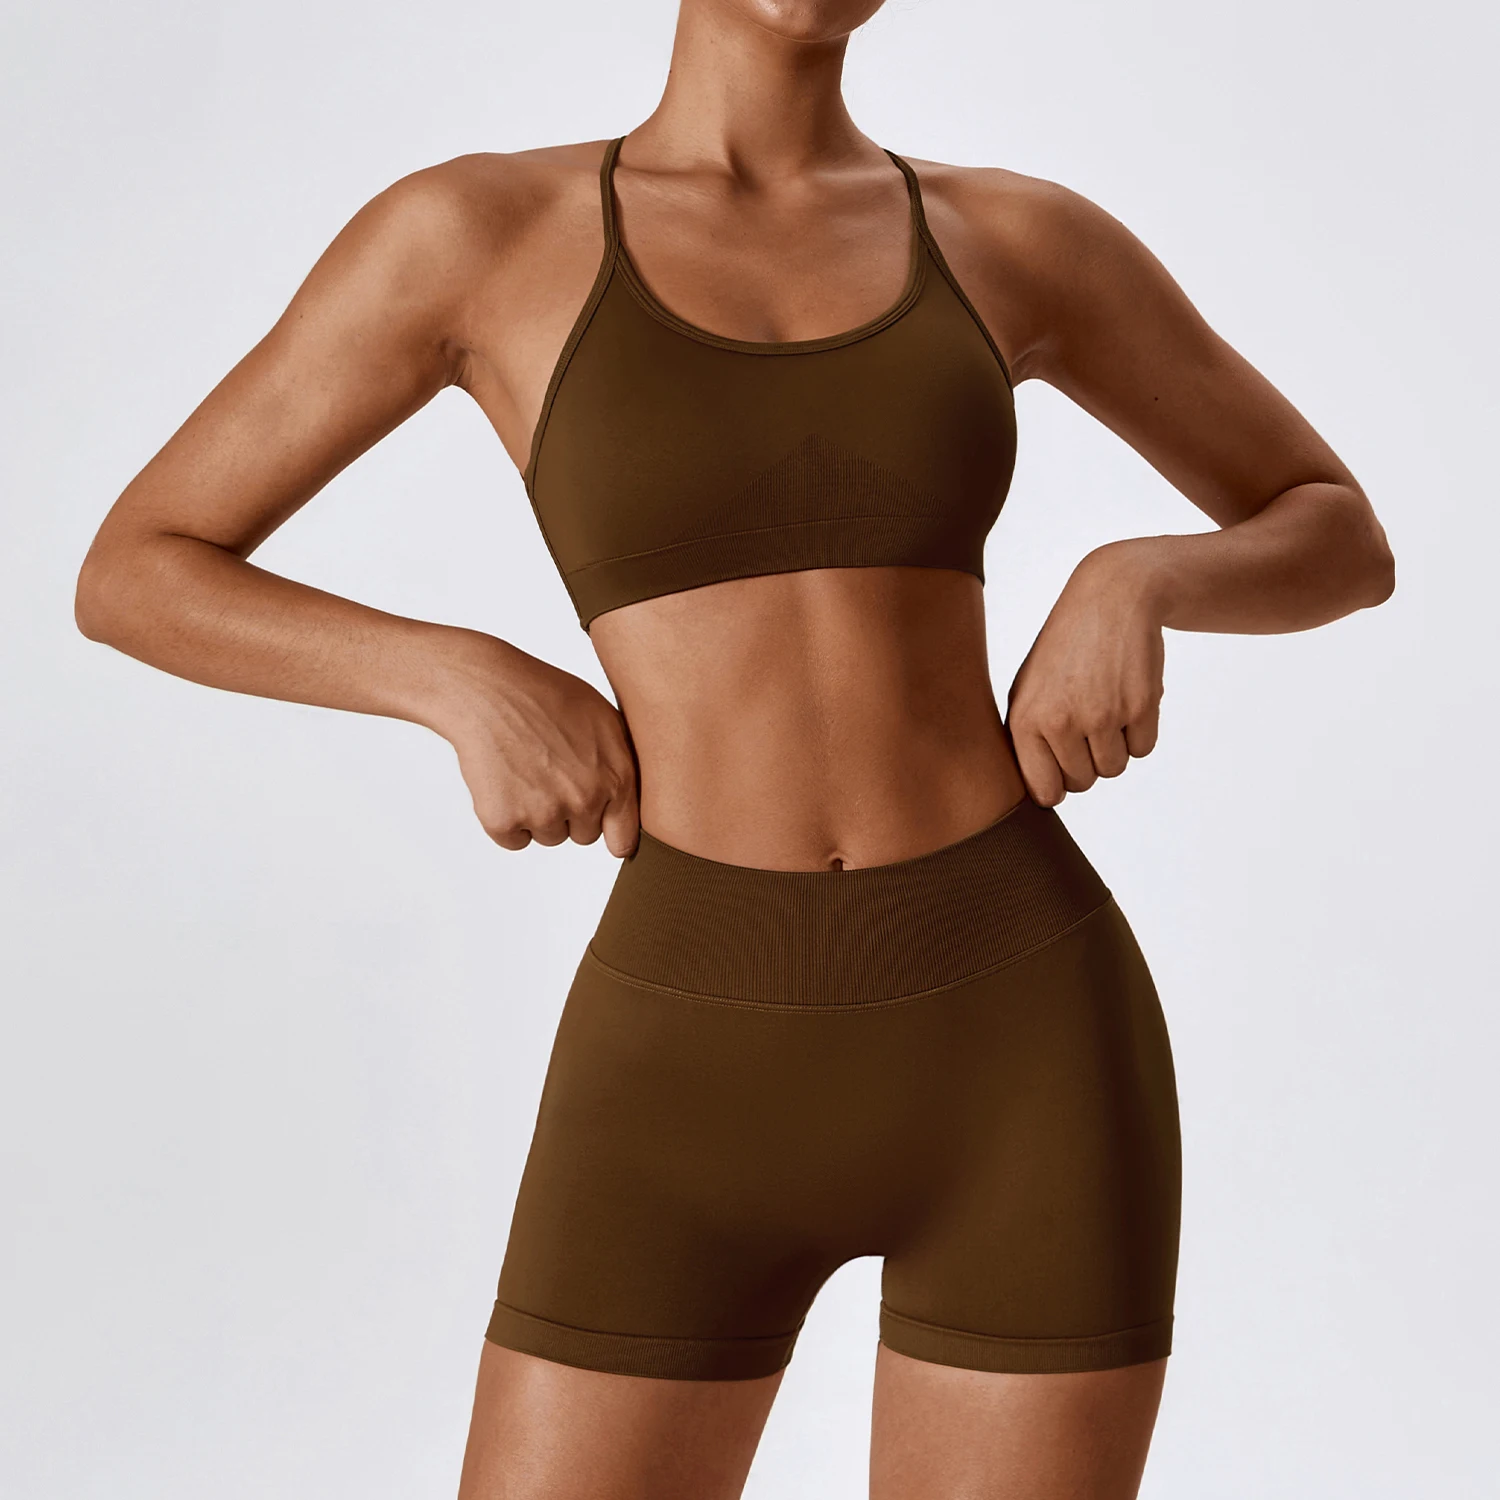 Summer Gym Yoga Sets Women's High Quality Seamless V Back Shorts Workout Clothing Activewear Yoga Sets